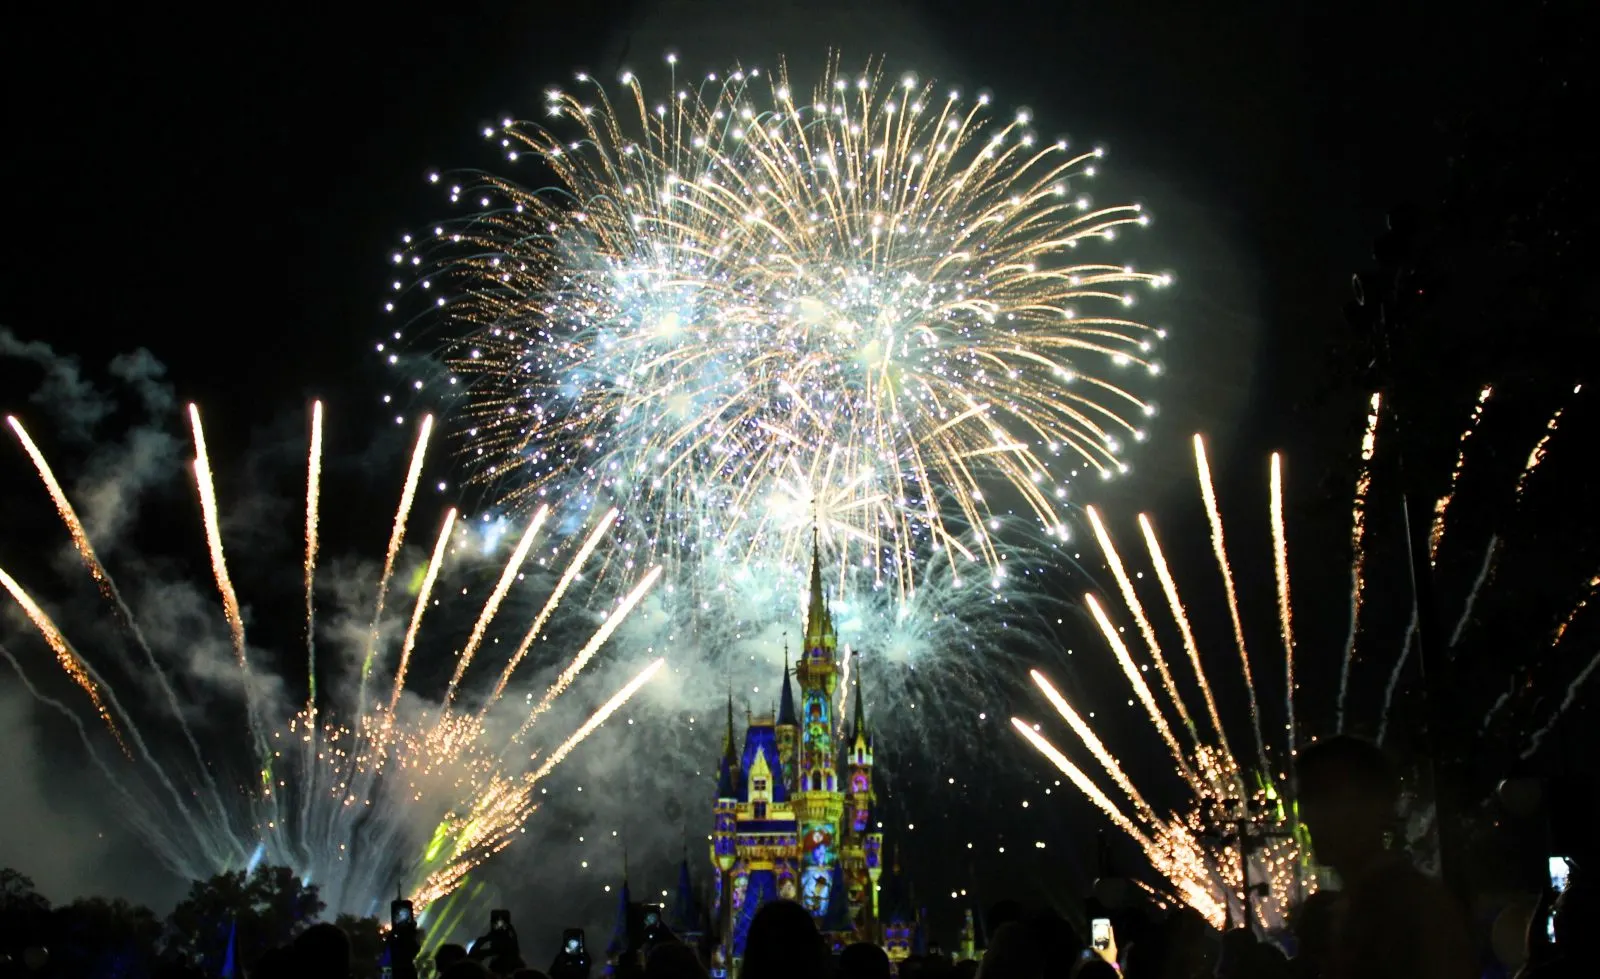 magic kingdom fireworks over cinderella castle